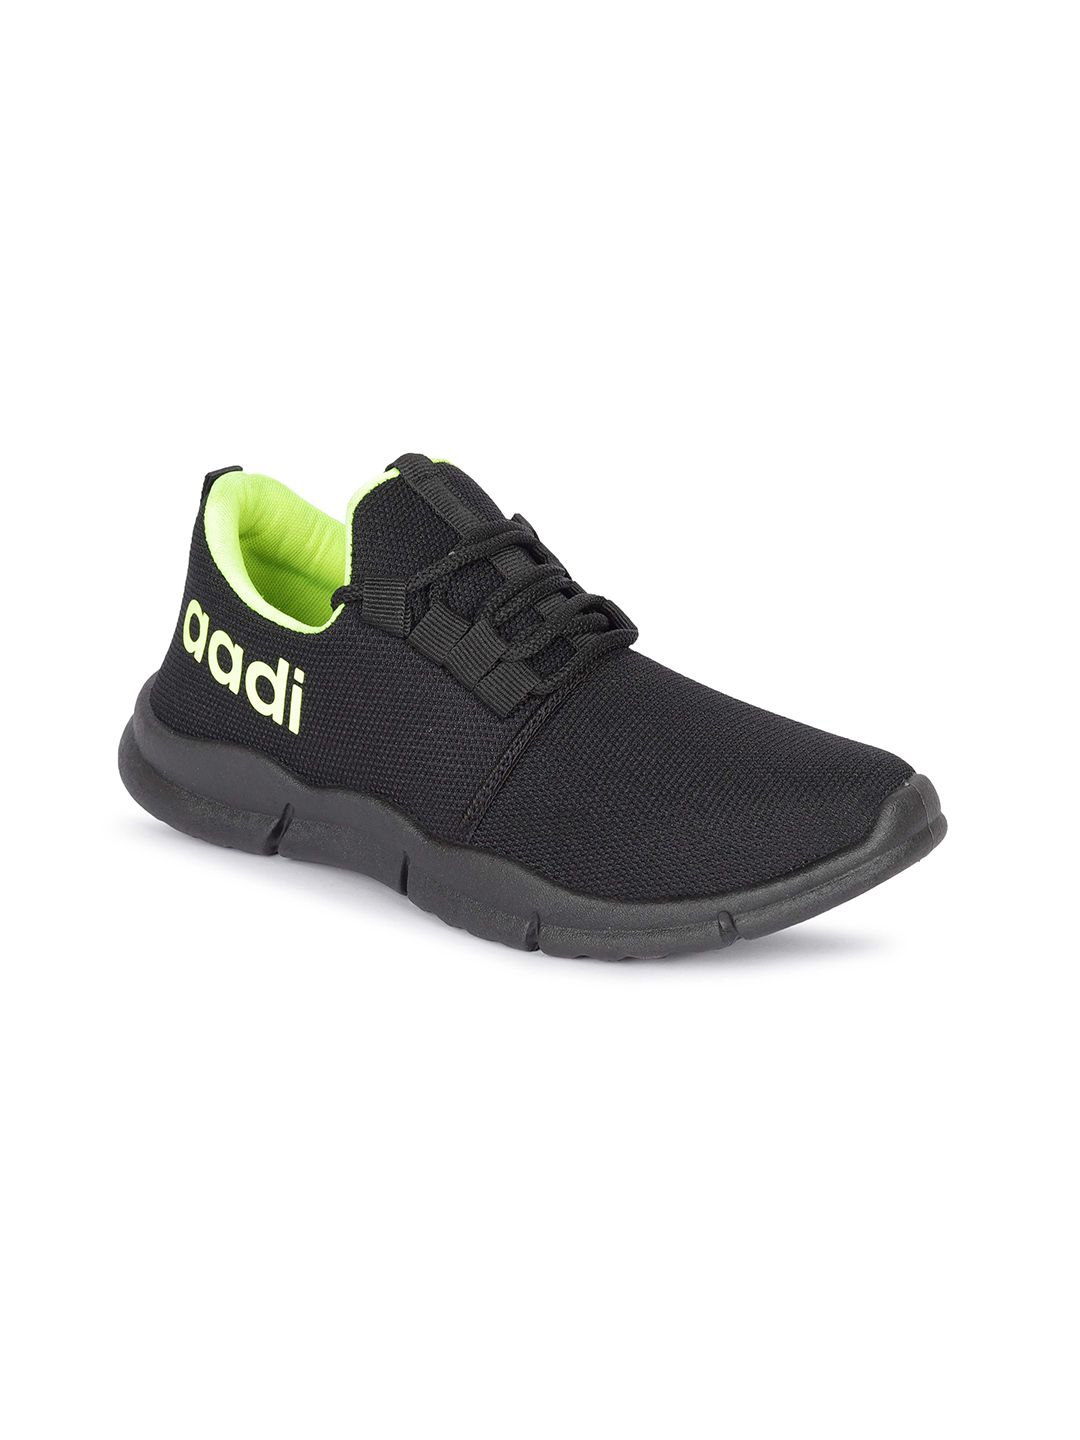     			Aadi Outdoor Causal Shoes - Black Men's Sneakers